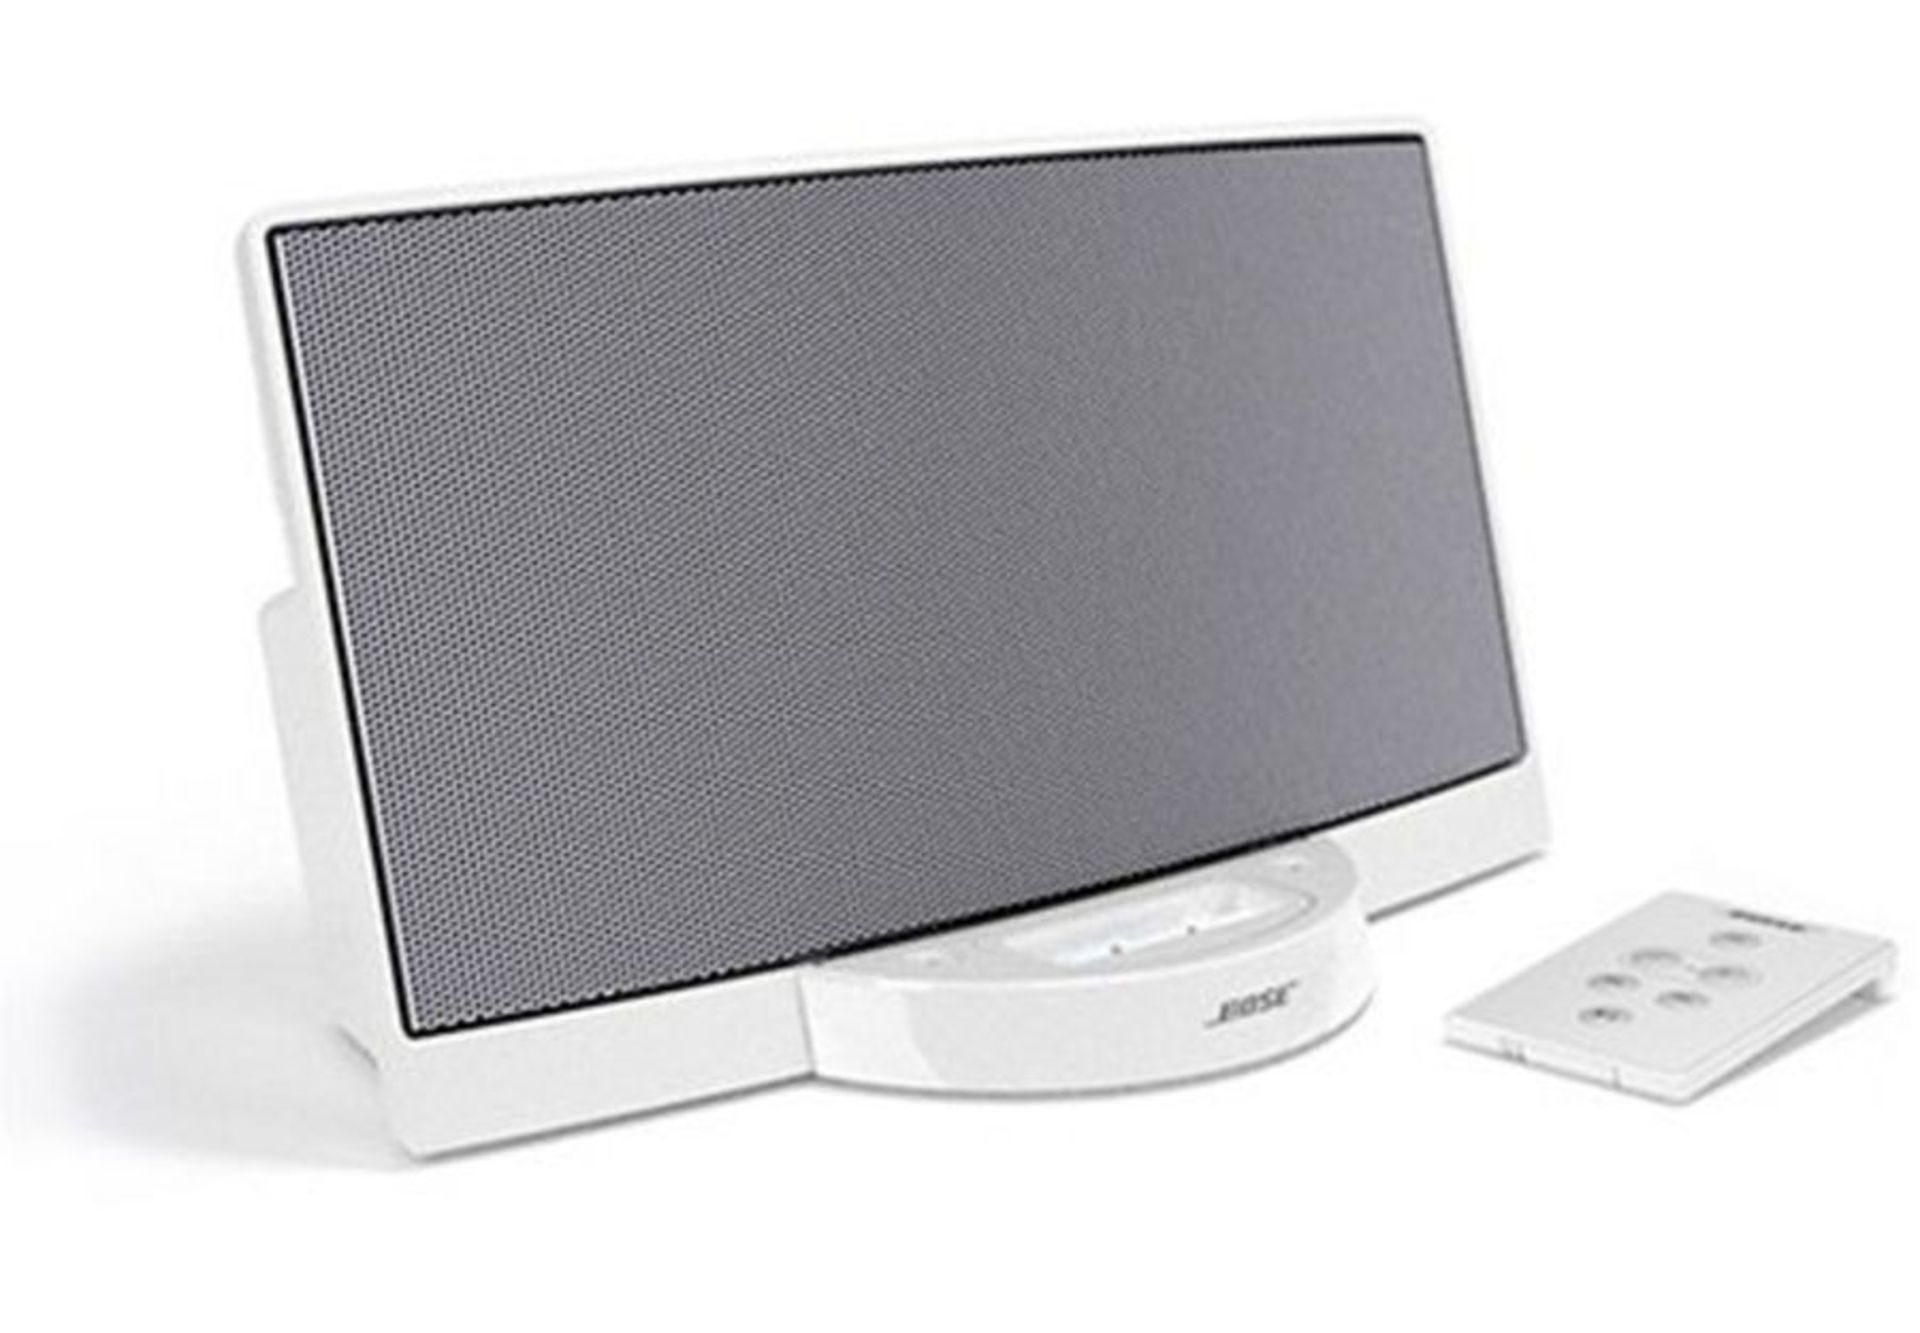 RRP £85.00 Bose SoundDock Digital Music System - Portable speakers with digital player dock for i